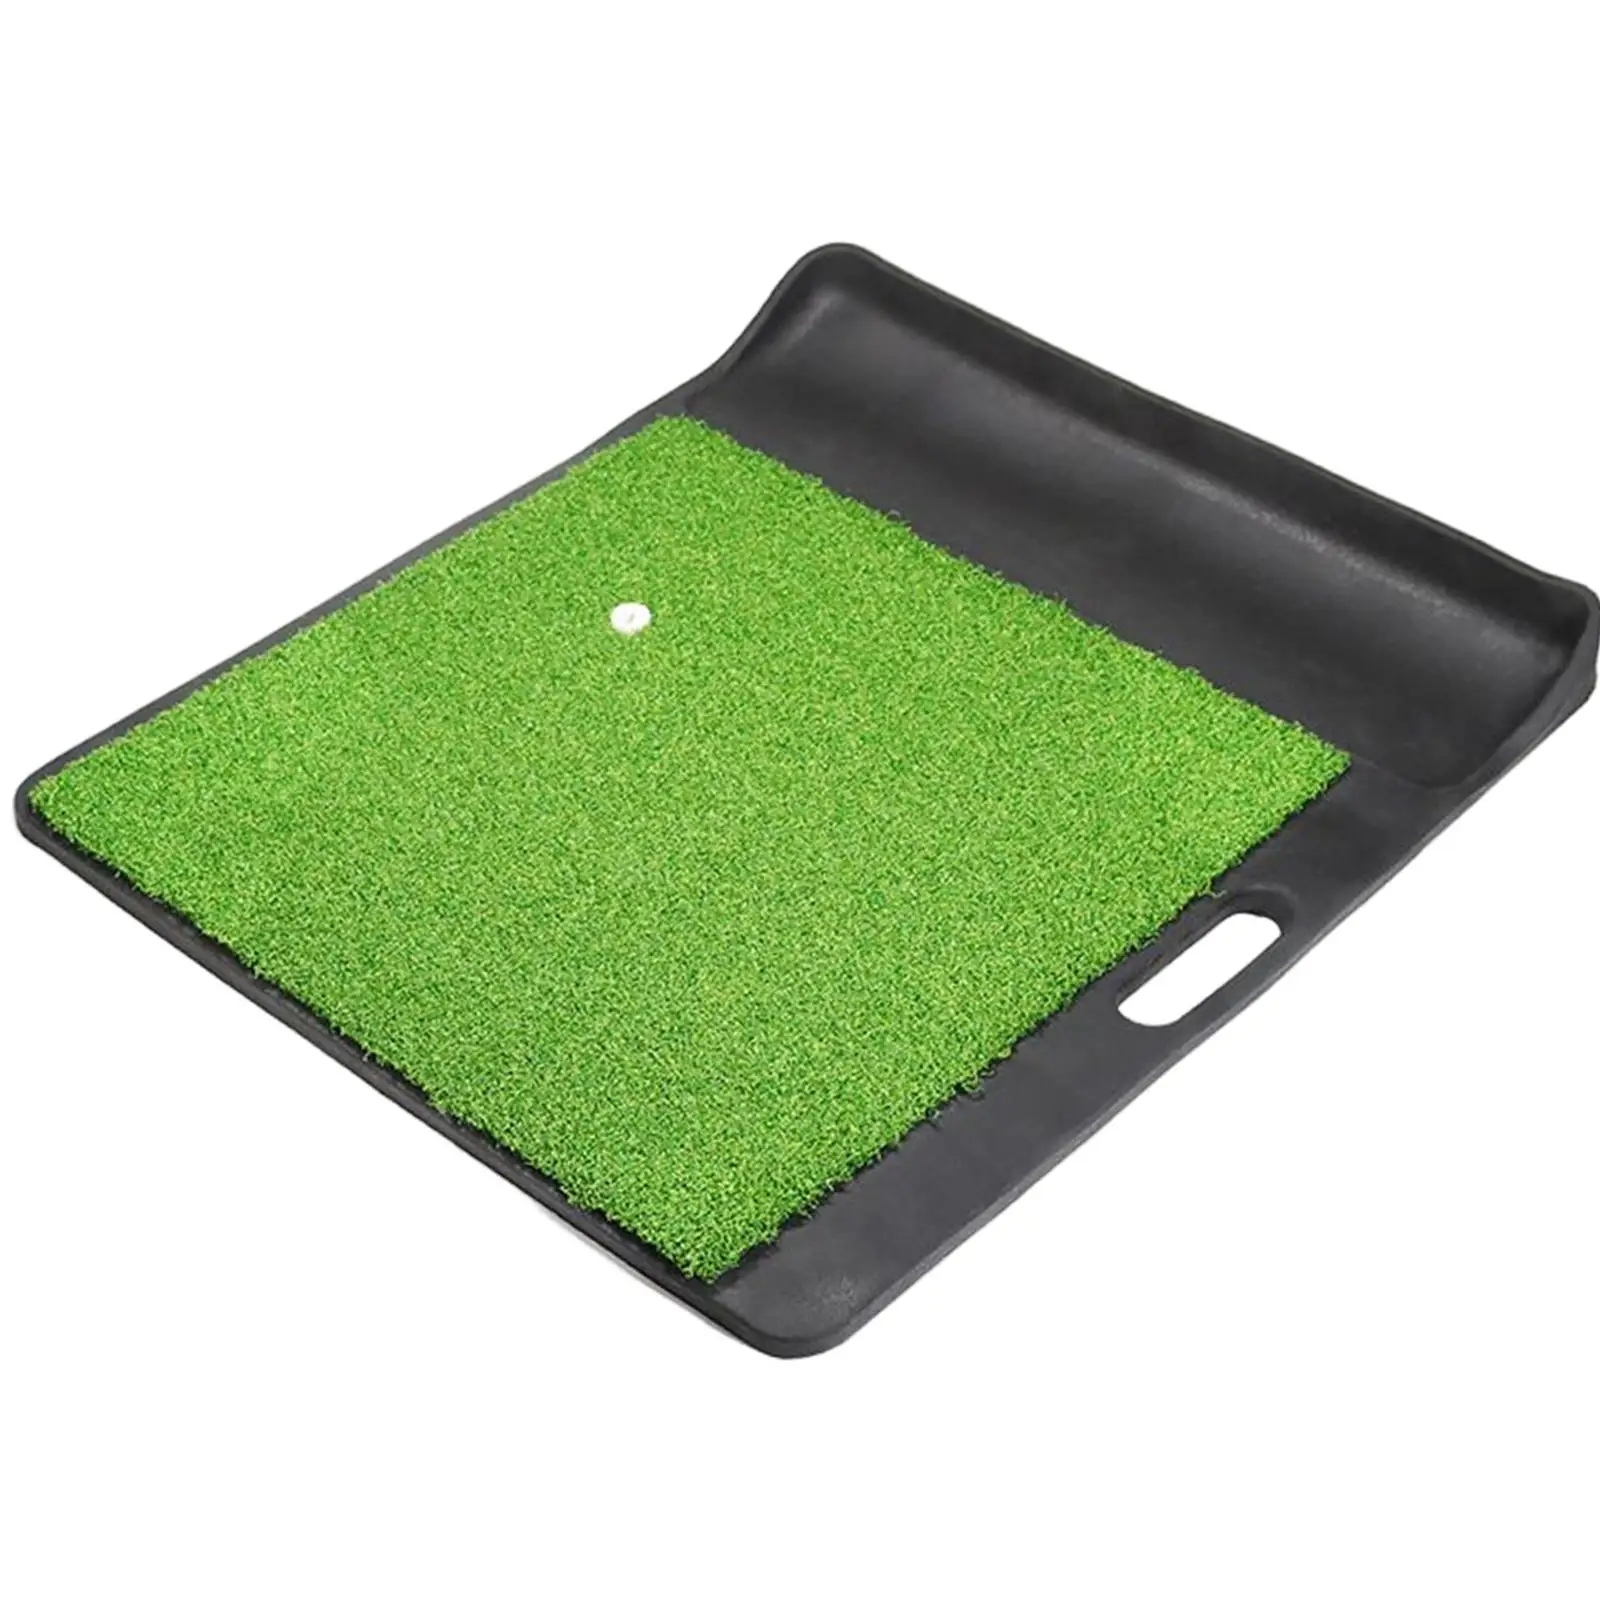 Portable Golf Hitting Mat Golf Practice Training Pad Turf Mat for Backyard